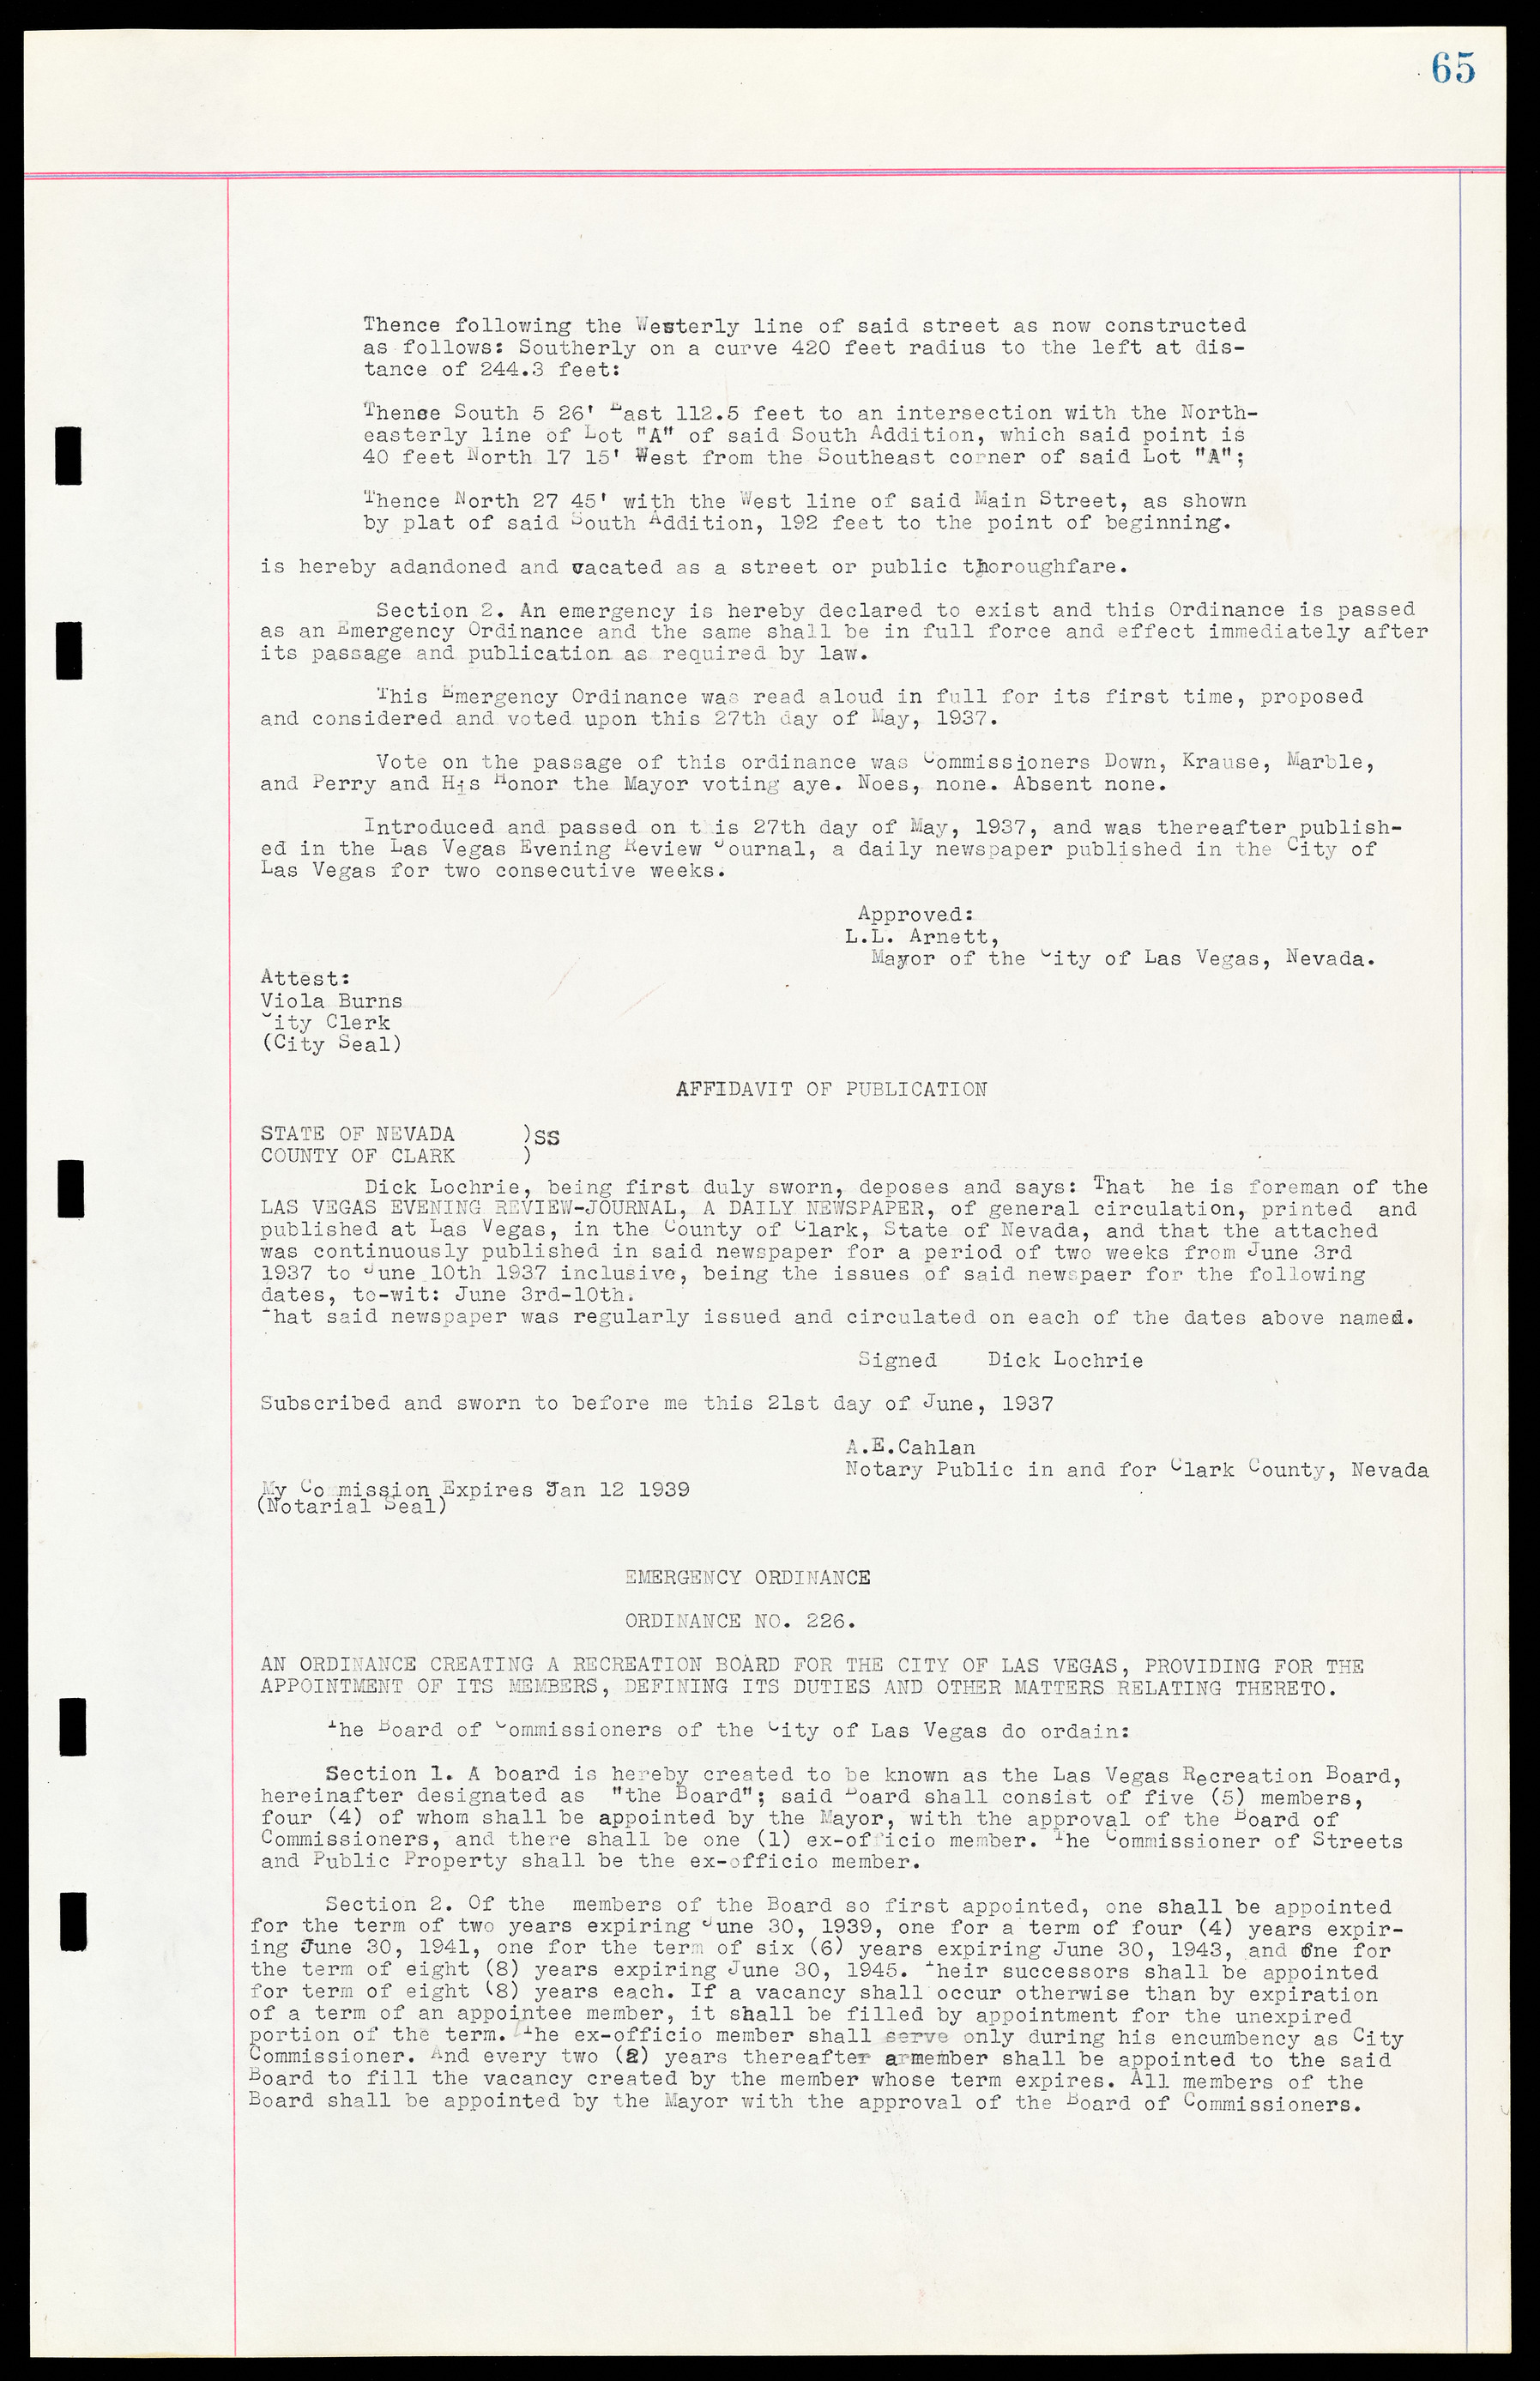 Las Vegas City Ordinances, March 31, 1933 to October 25, 1950, lvc000014-83